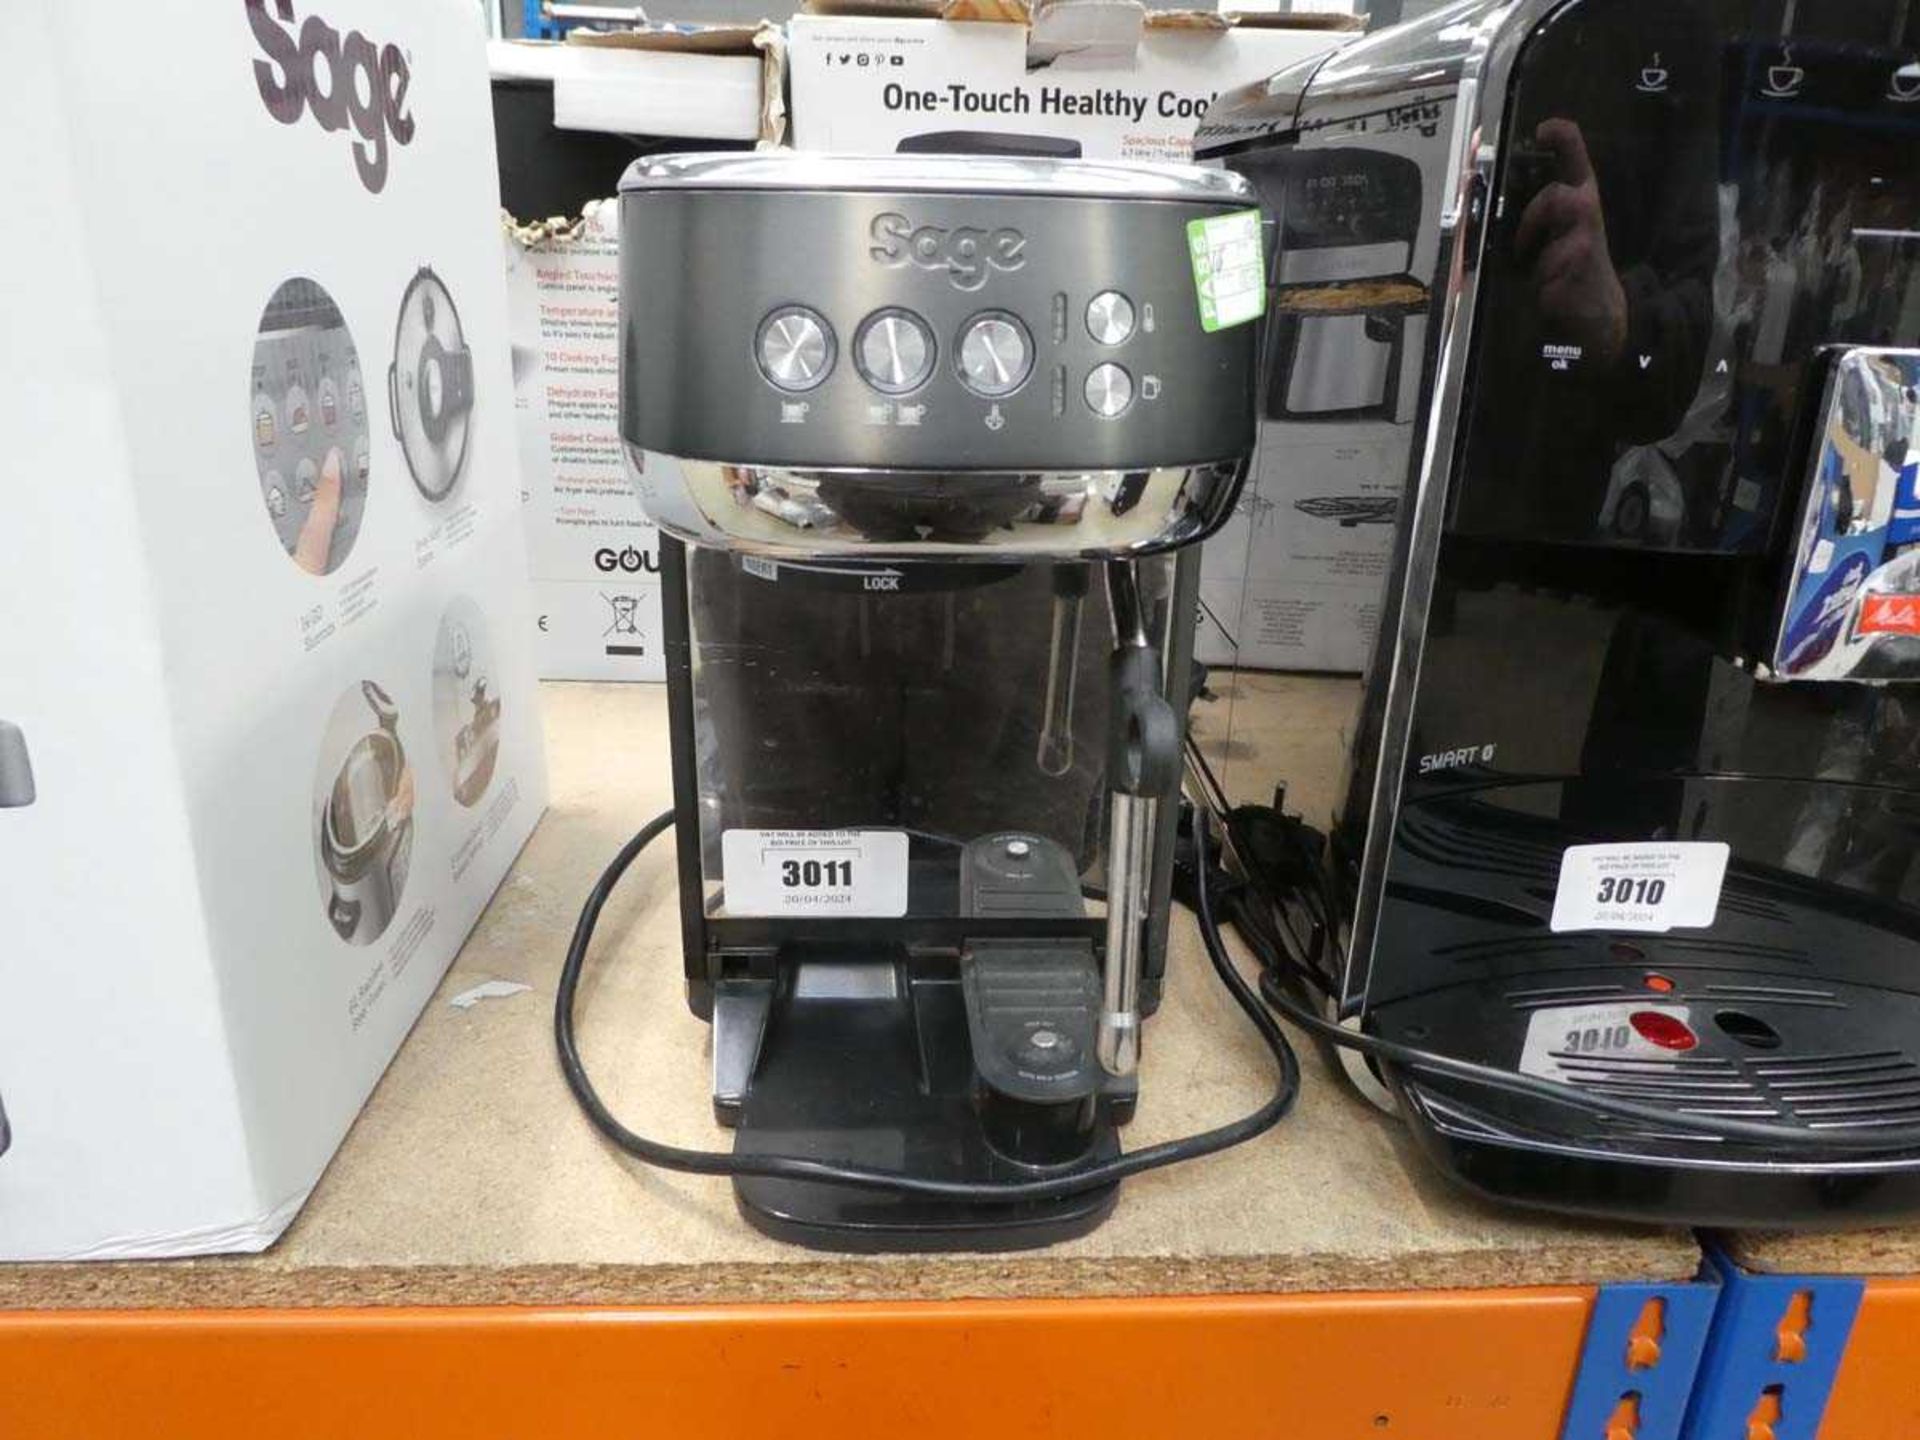 +VAT Unboxed Sage Bambino Plus coffee machine